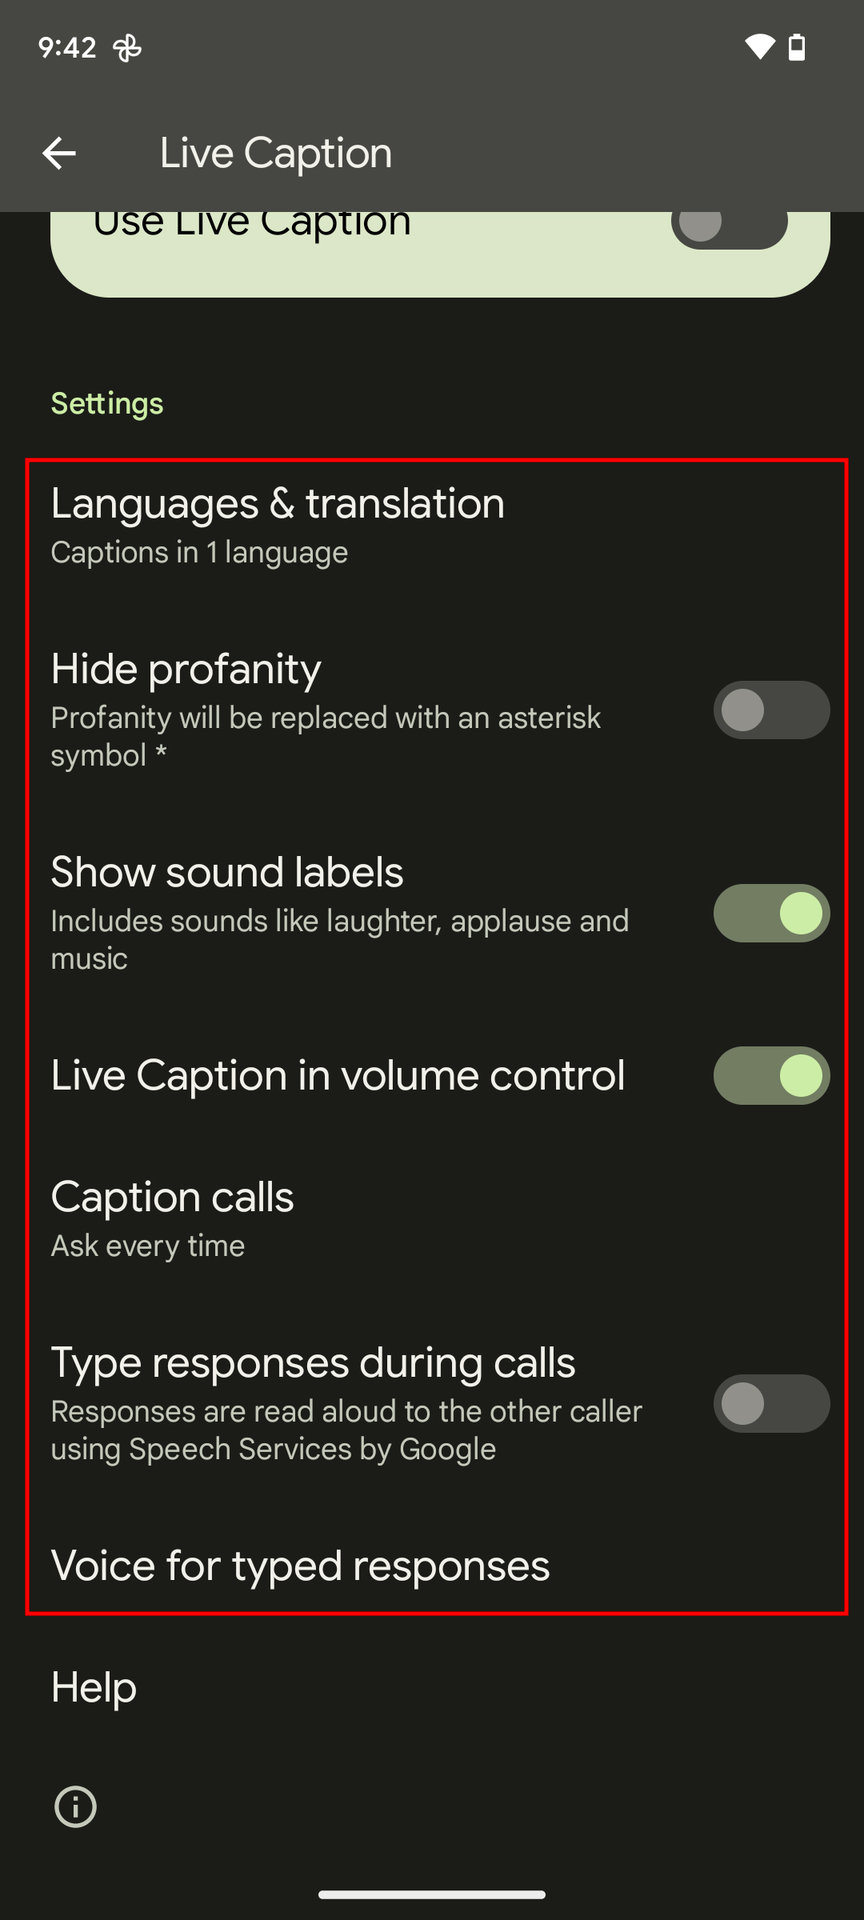 Access the Live Caption settings 3